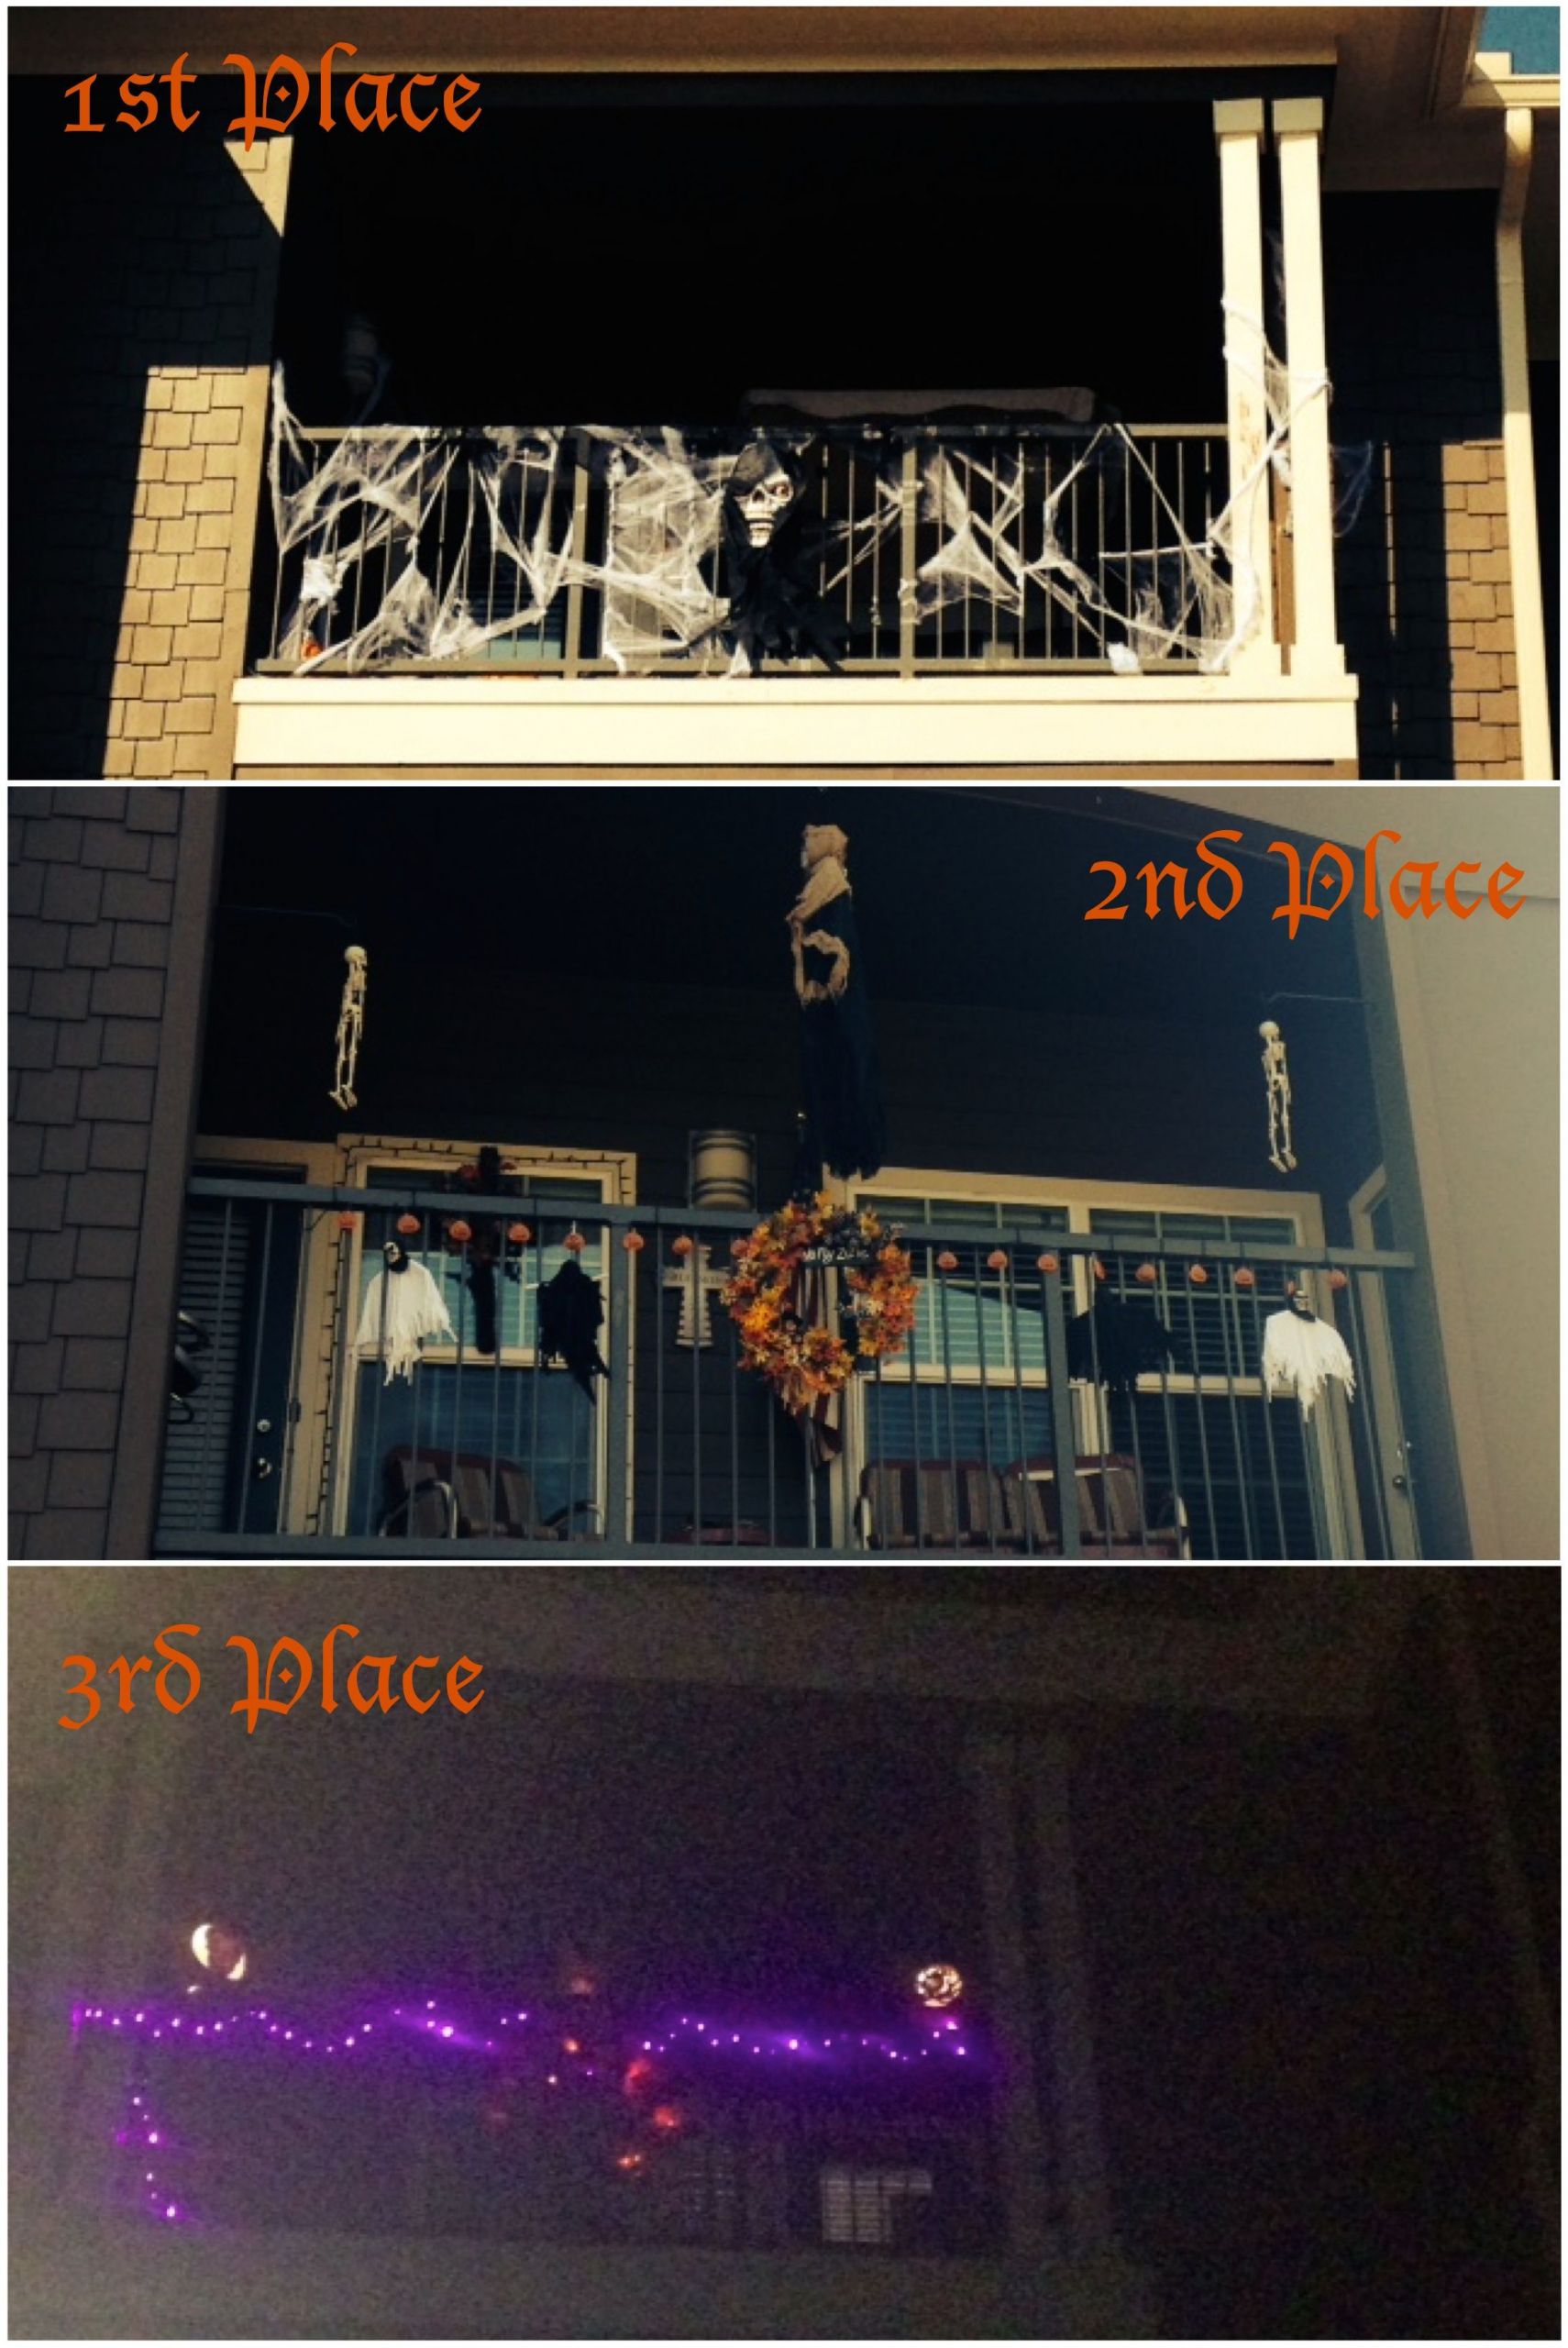 Halloween Balcony Decorating Ideas
 CONGRATULATIONS to KROCK s Halloween Balcony Decorating